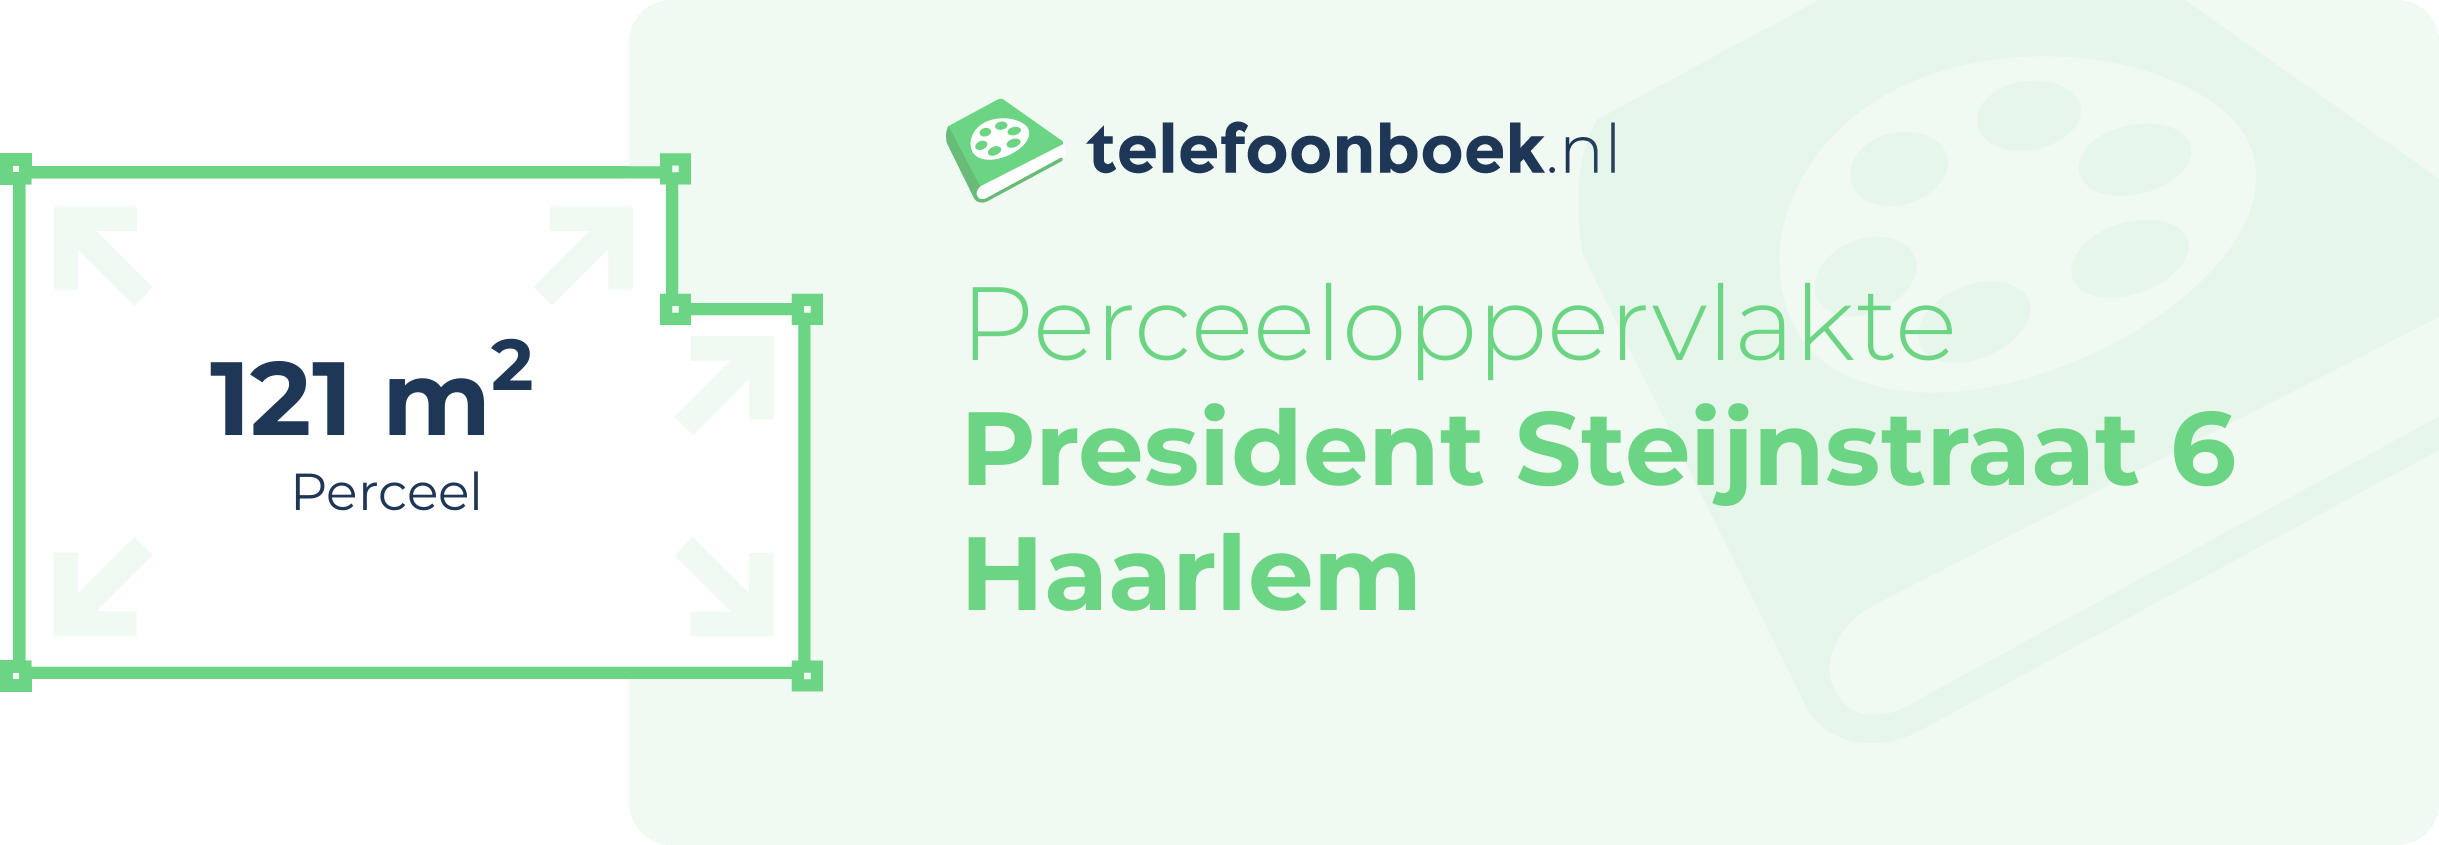 Perceeloppervlakte President Steijnstraat 6 Haarlem